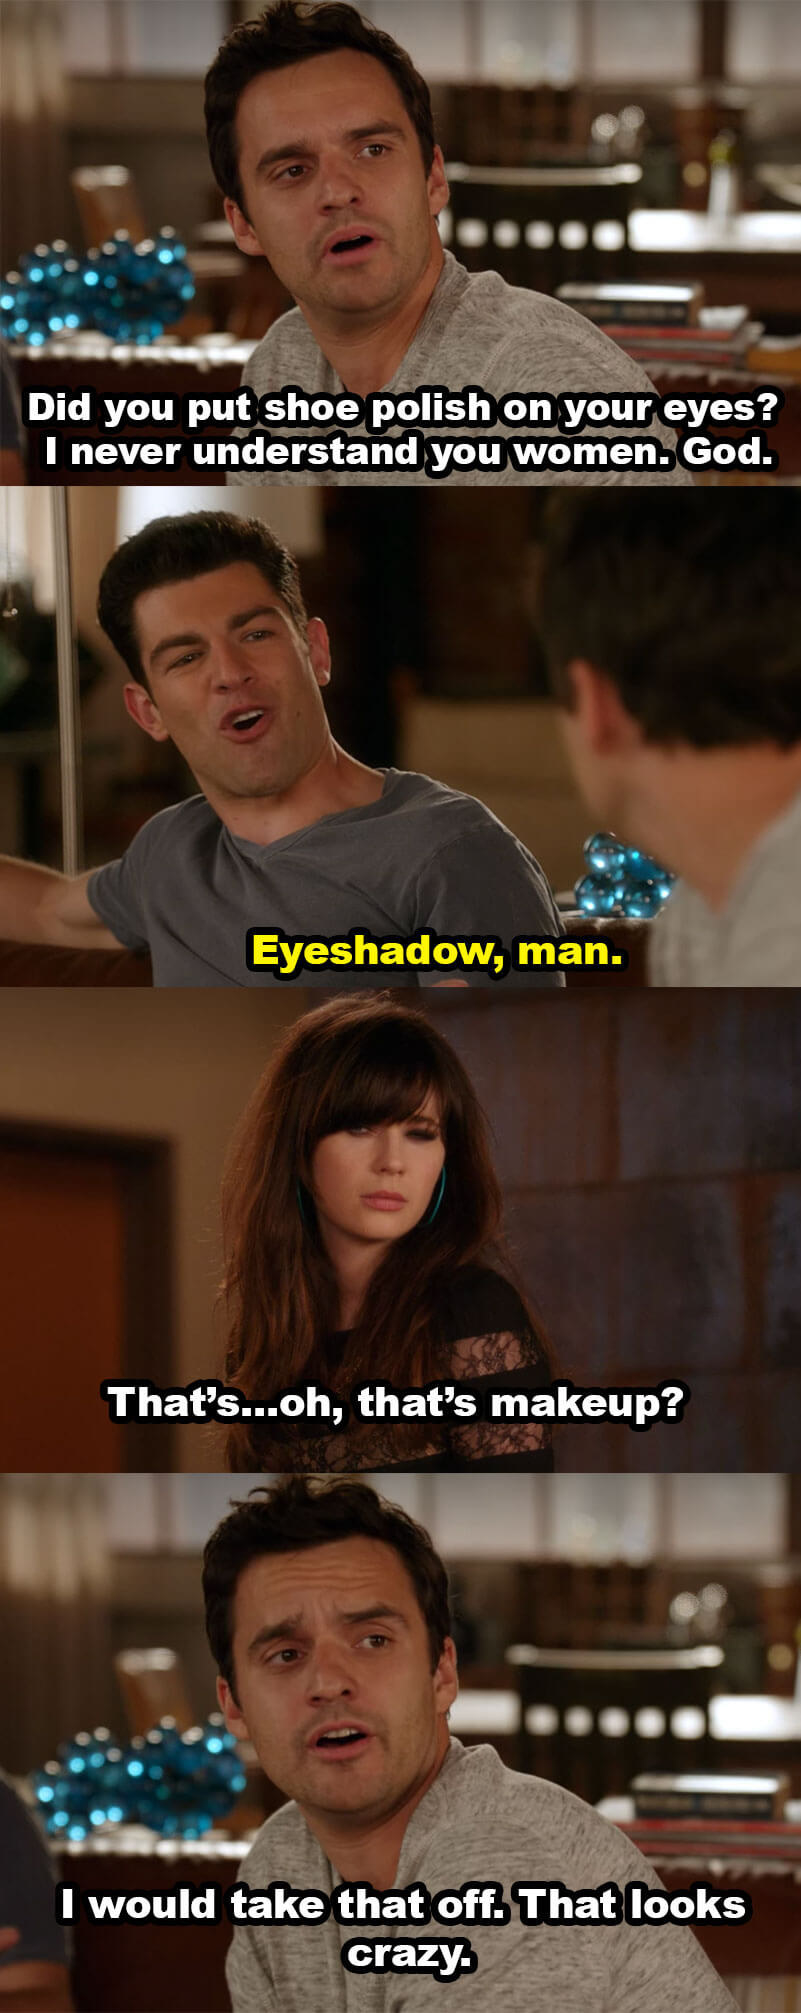 Nick asks if Jess put shoe polish on her eyes, but Schmidt tells him it&#x27;s eyeshadow. Nick tells Jess it looks crazy